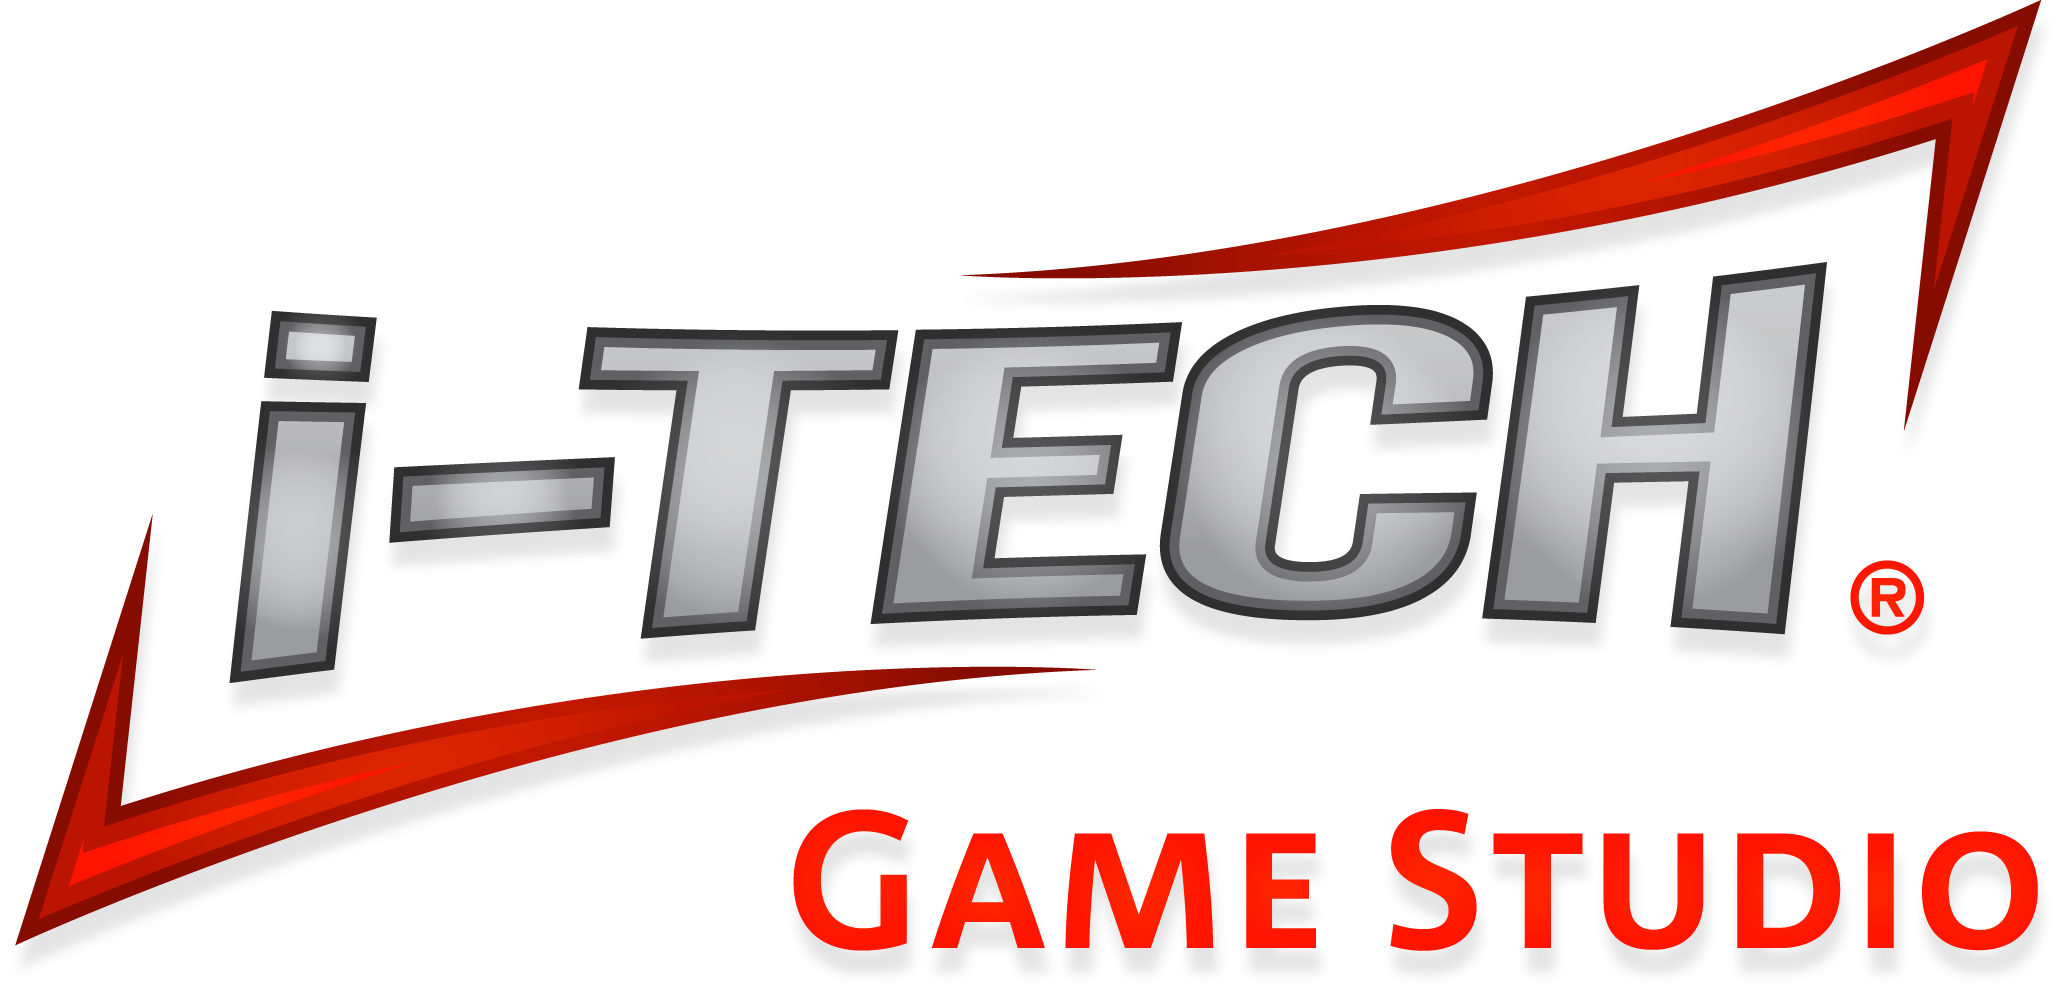 First tech. 1tech. Теч тим лого. АЙТЕК групп Ульяновск логотип. I Tech logo.